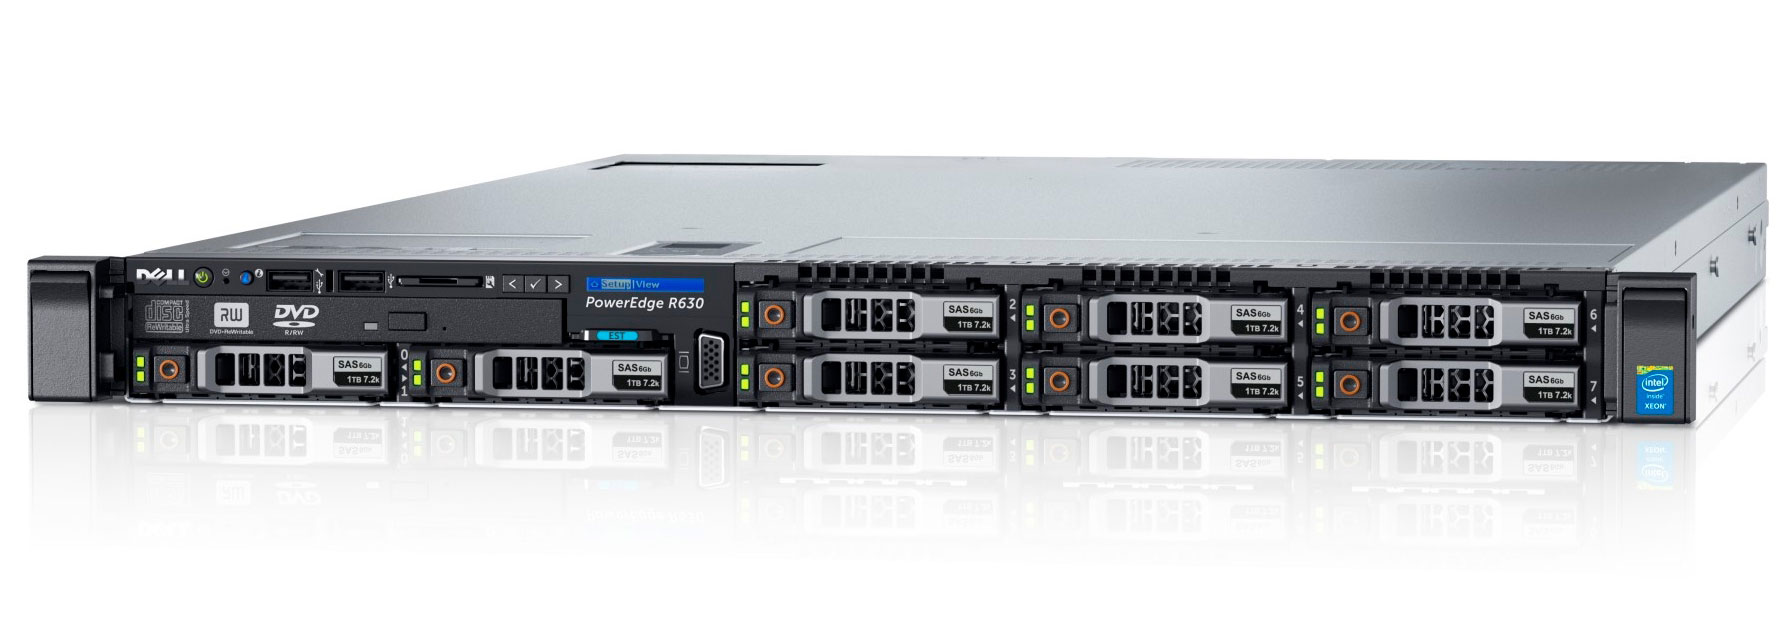 Подробное фото Сервер DELL PowerEdge R630 Xeon 2x E5-2650v4 256Gb 2133P DDR4 8x noHDD 2.5", SAS RAID Perc H730 mini, 1024Mb, DVD, 2*PSU